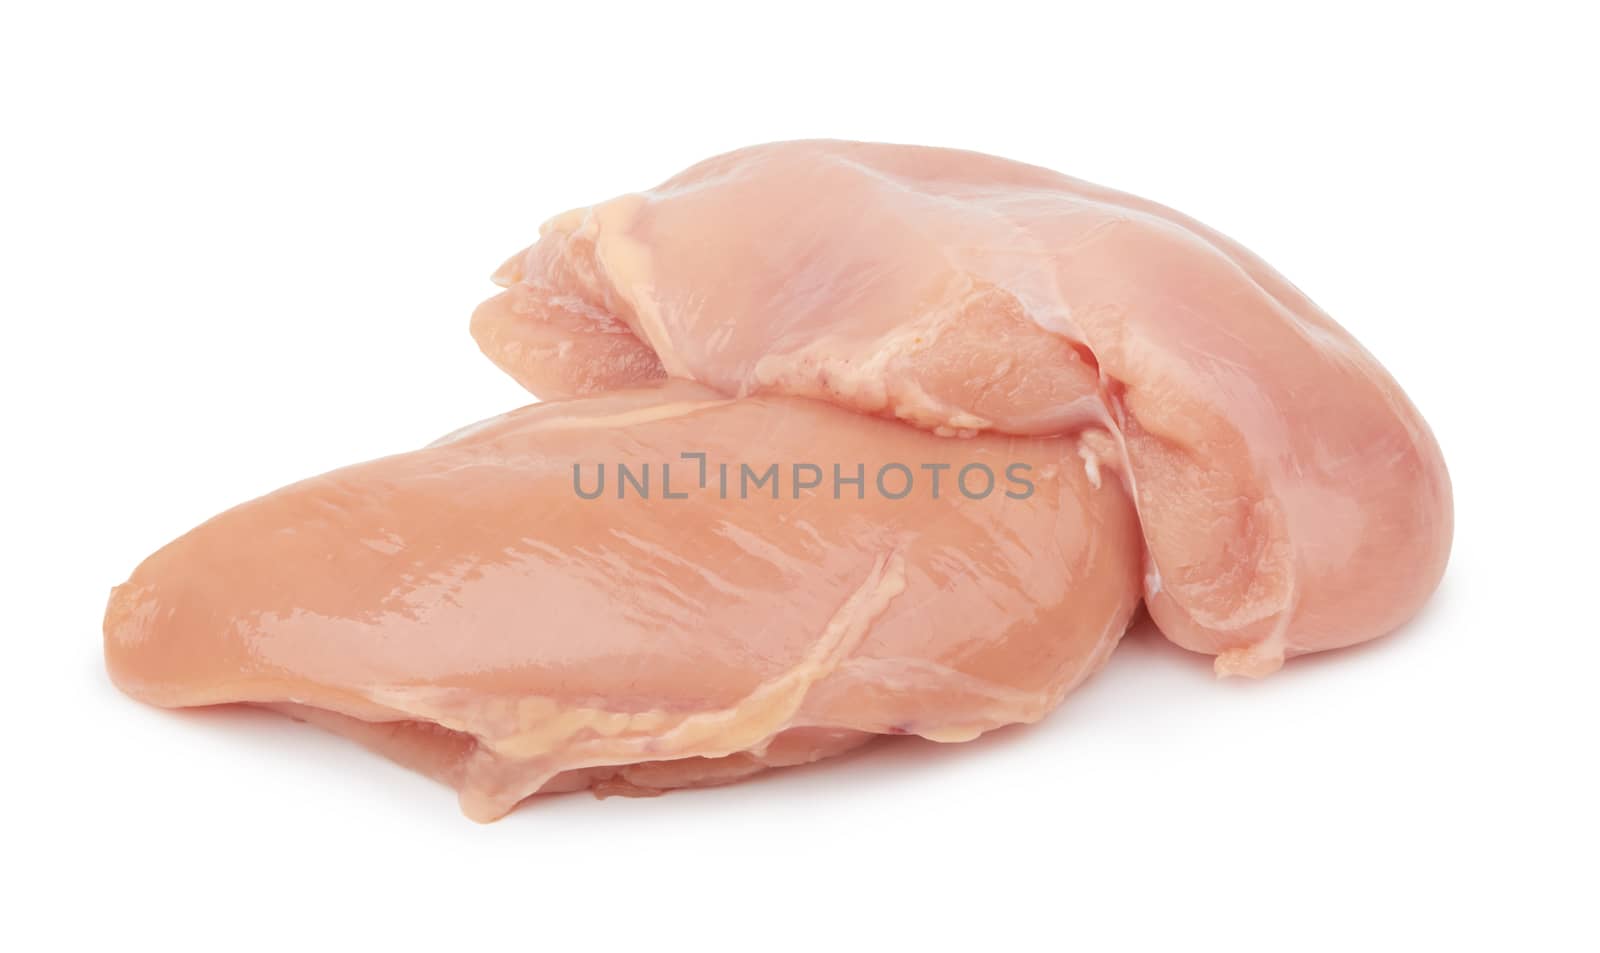 Raw chicken fillet by pioneer111